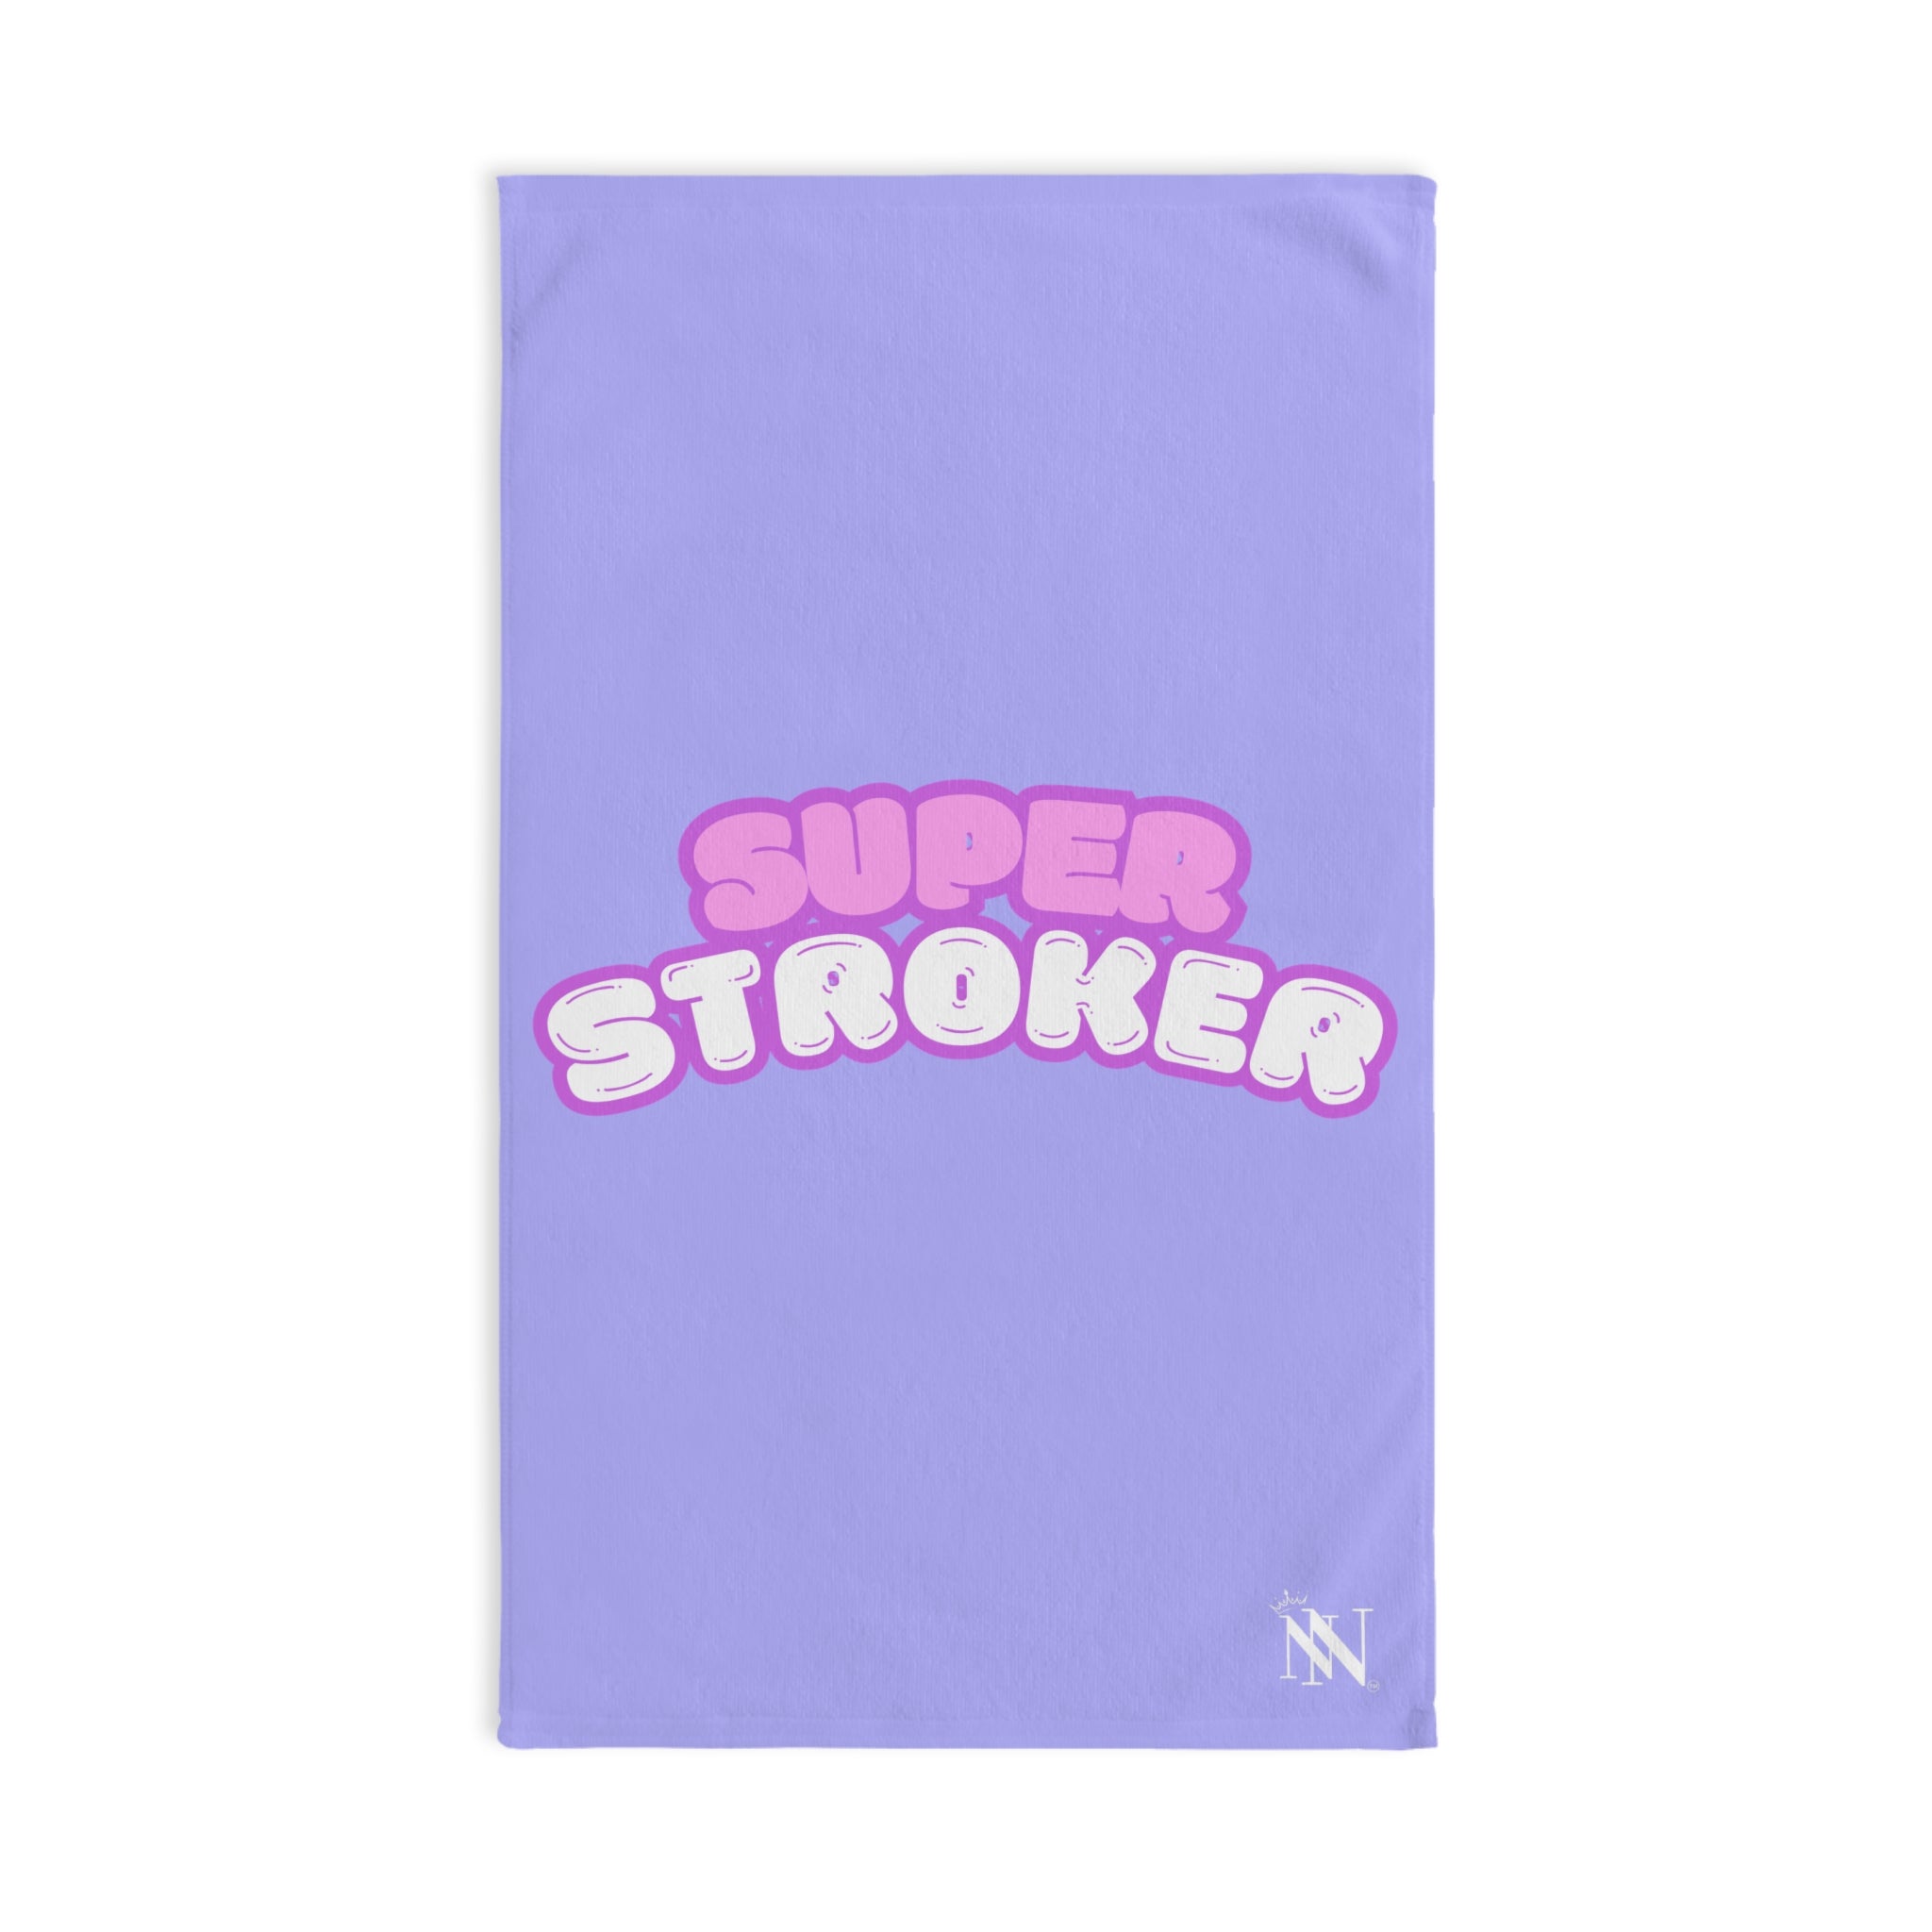 Super stroker sex towel